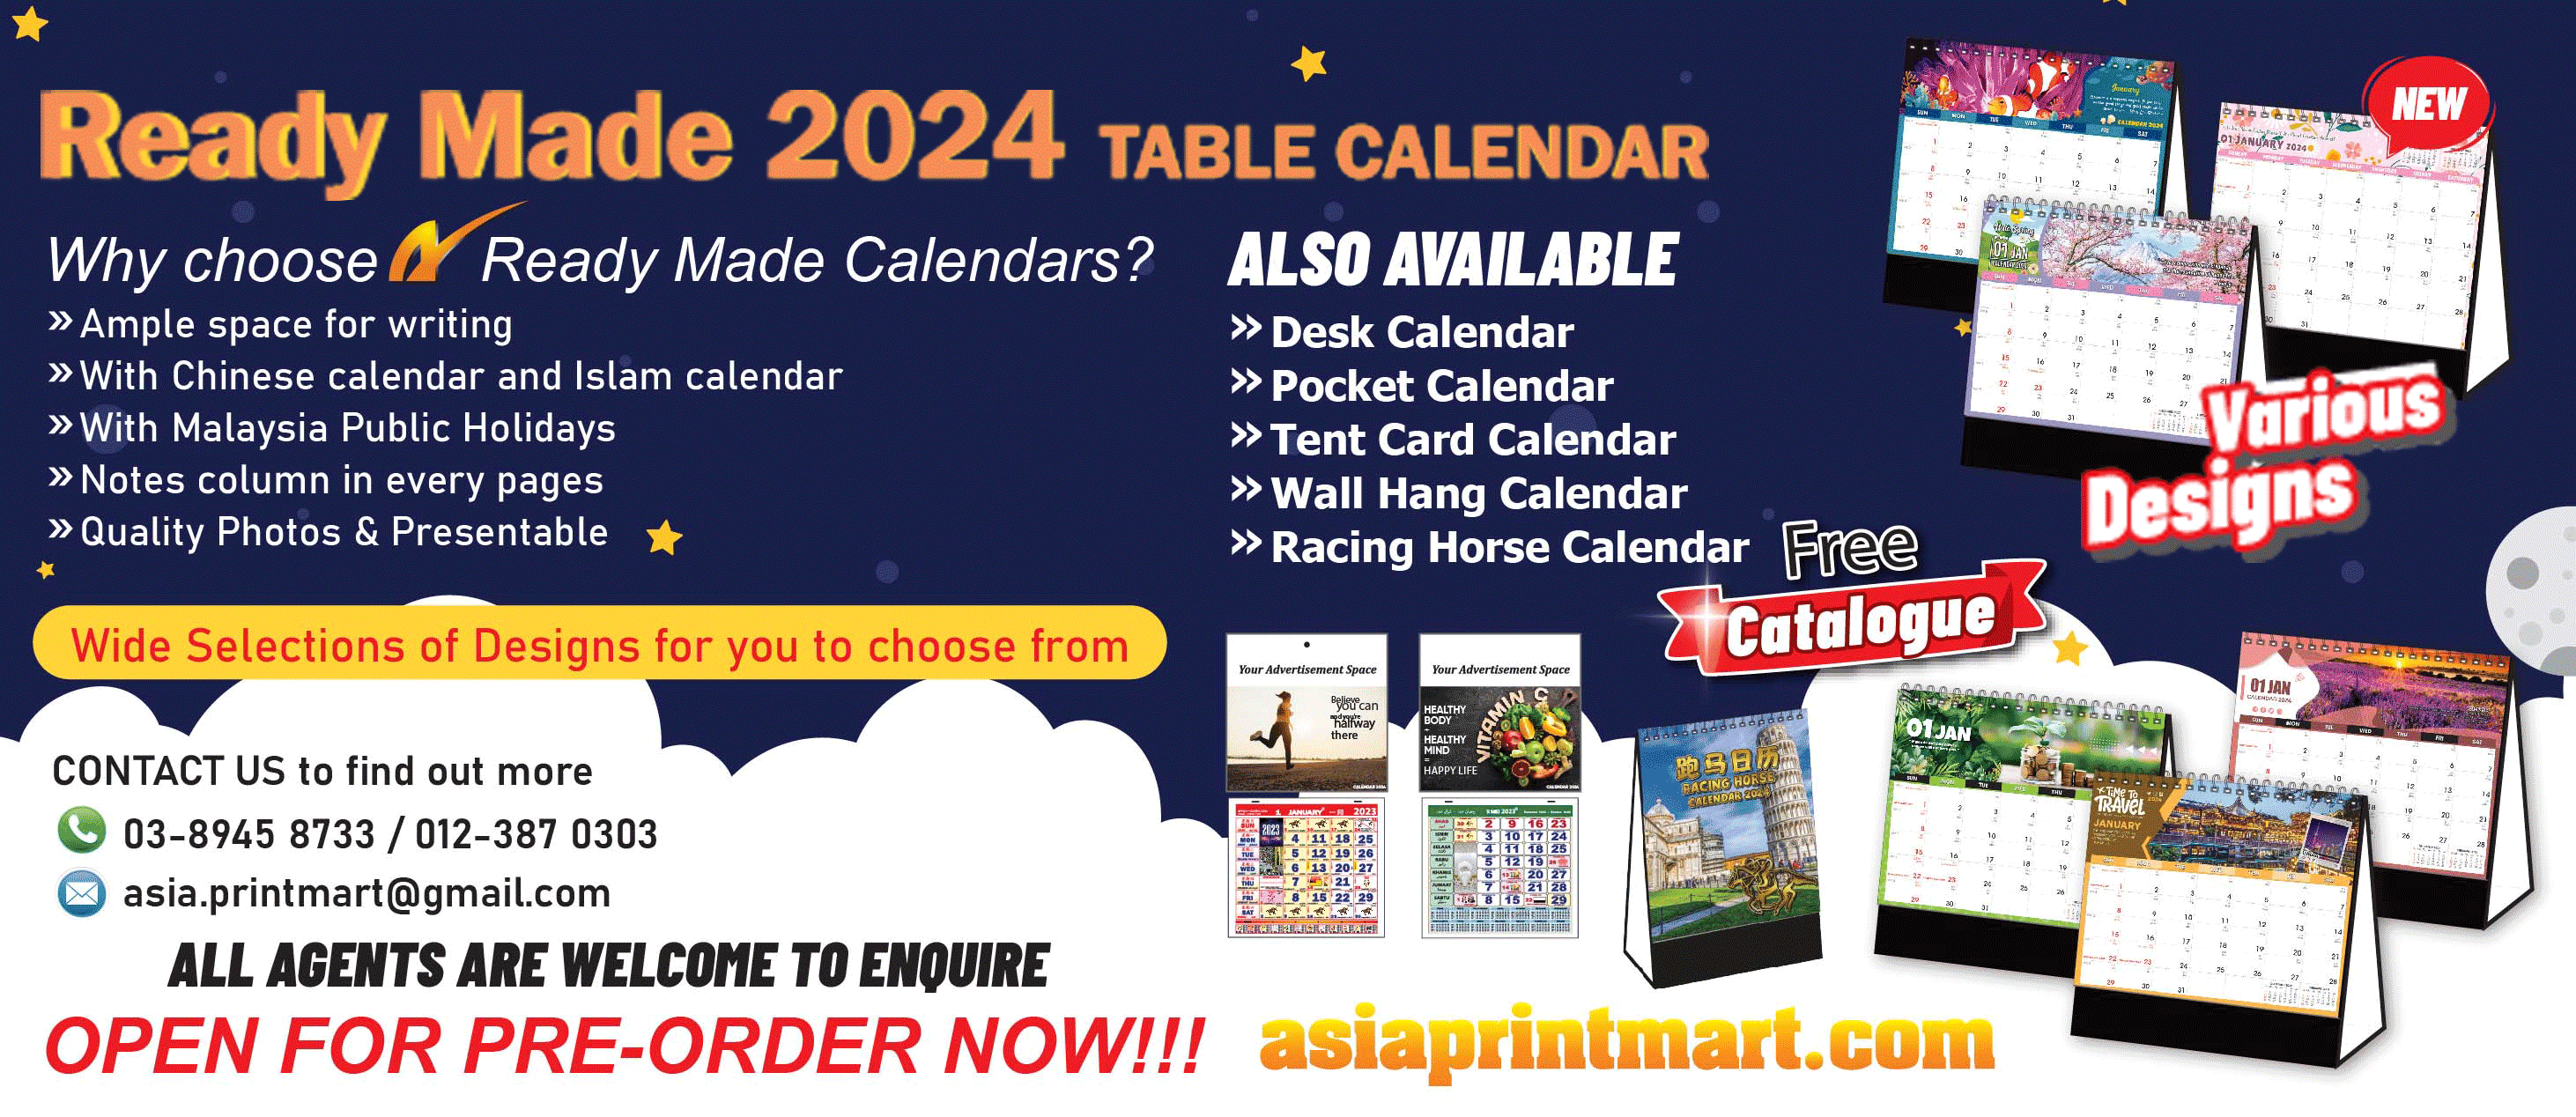 Custom Made Table Calendars 2024 | Print 2024 Desk Calendars | Print 2024 Ready Made Table Calendars | Cetak Kalendar Meja 2024 | Calendars Company Malaysia